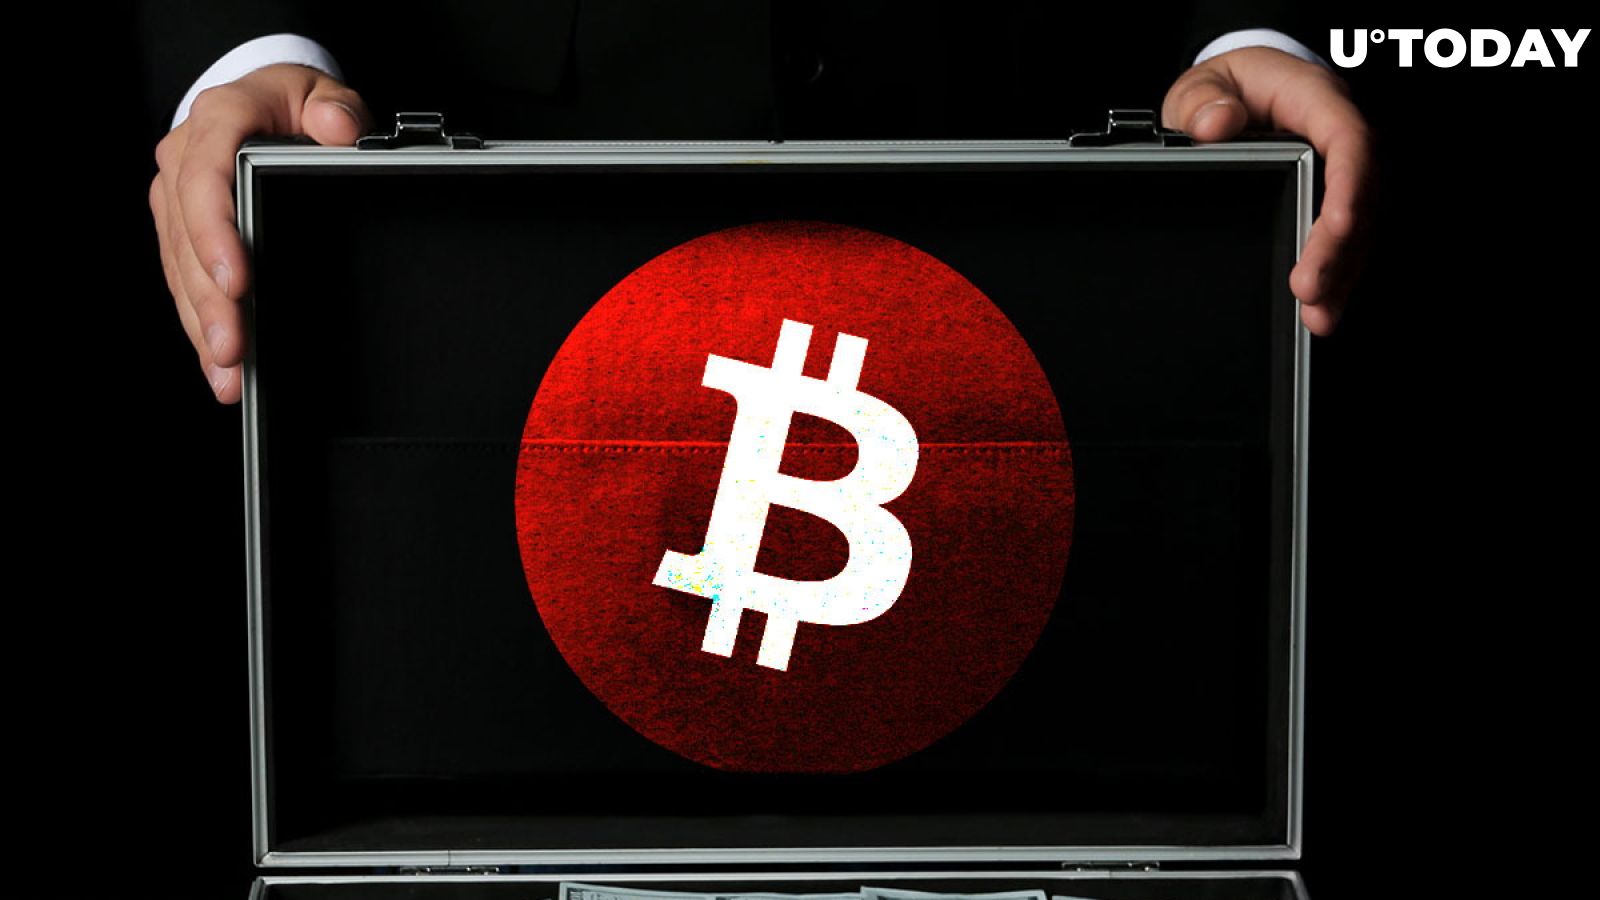 Bitcoin (BTC) Brings New Hard Money Buyers, Expert Says